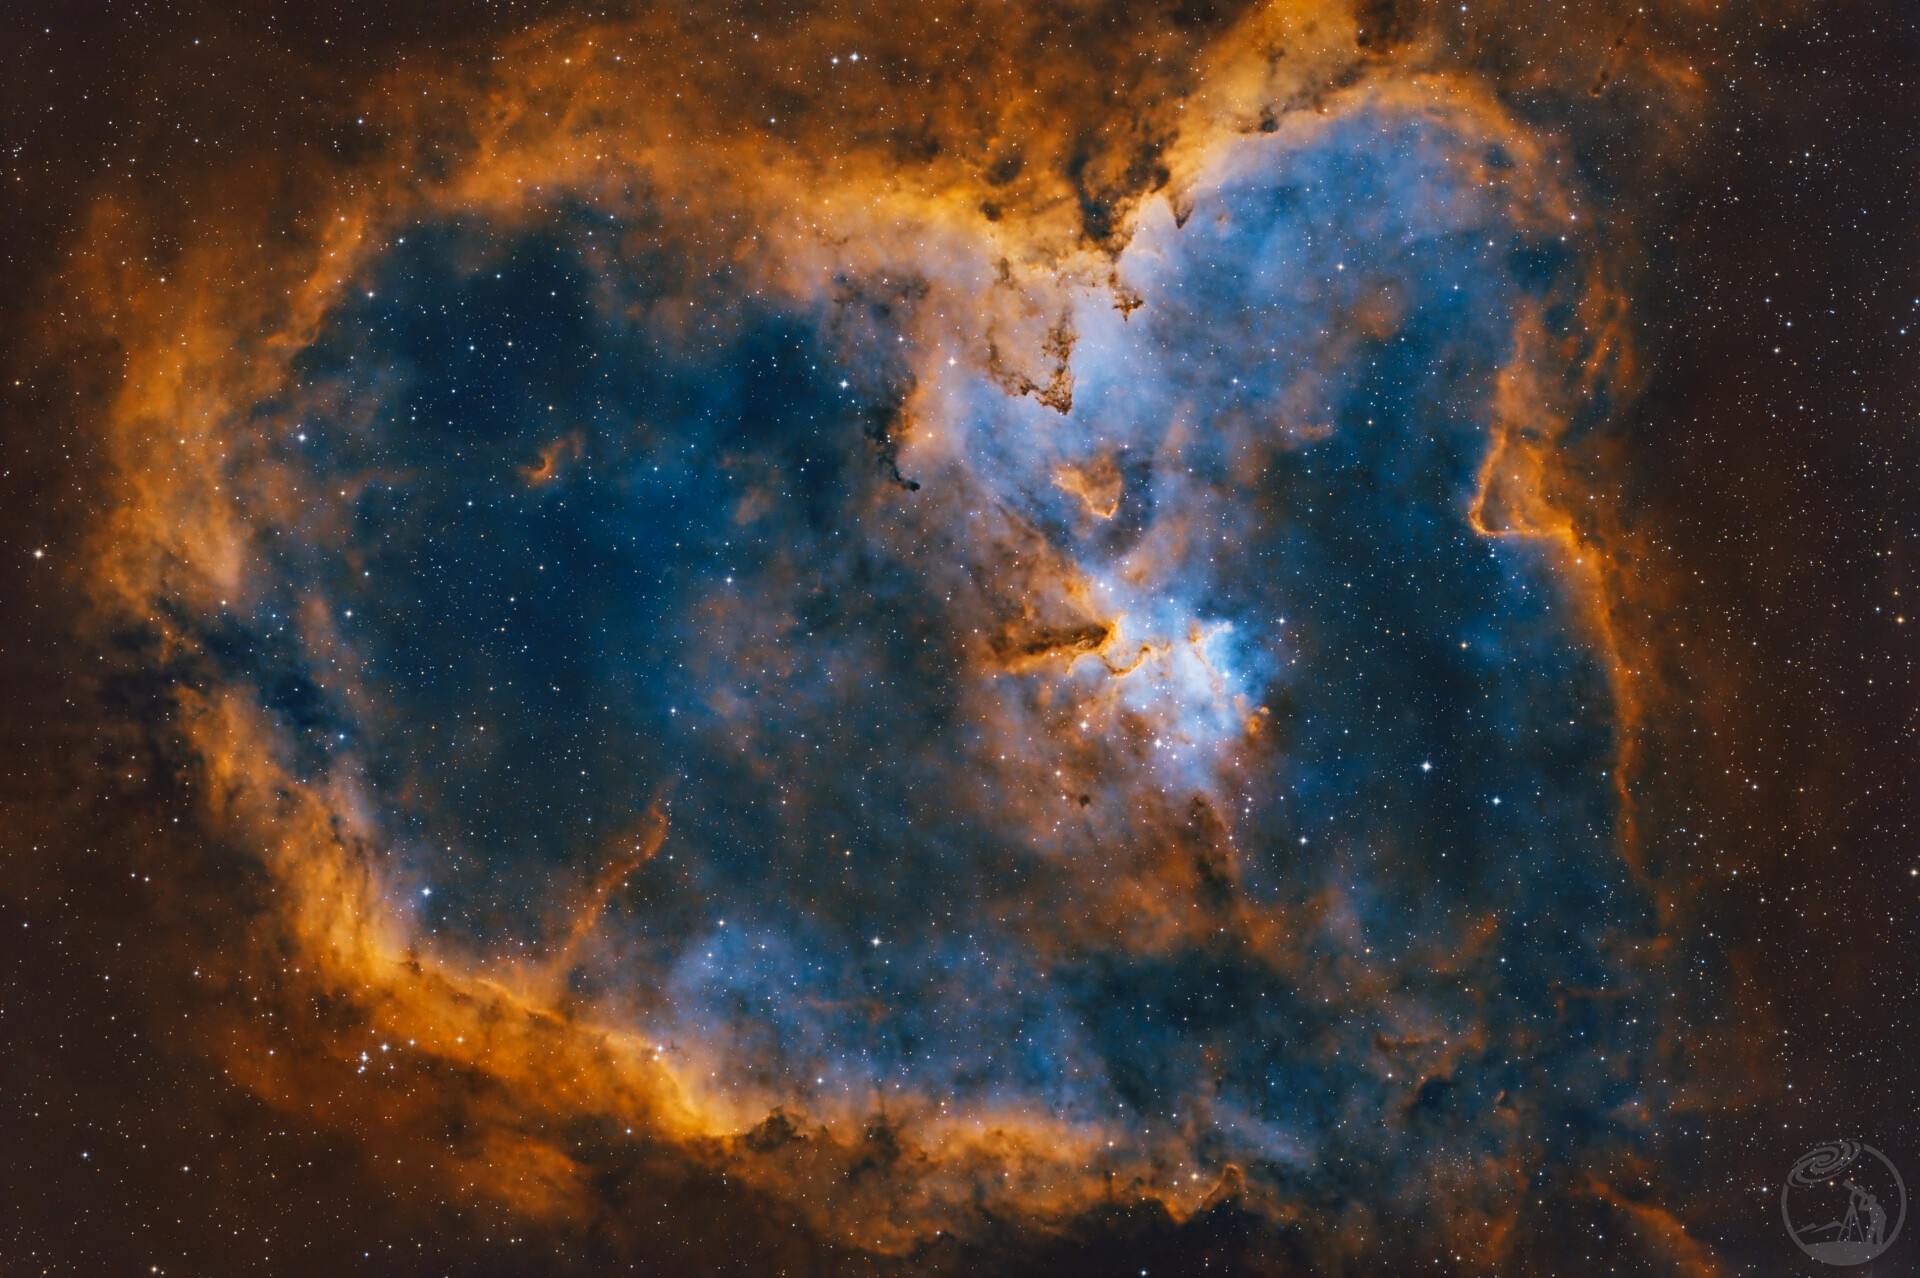 IC1805 心脏星云